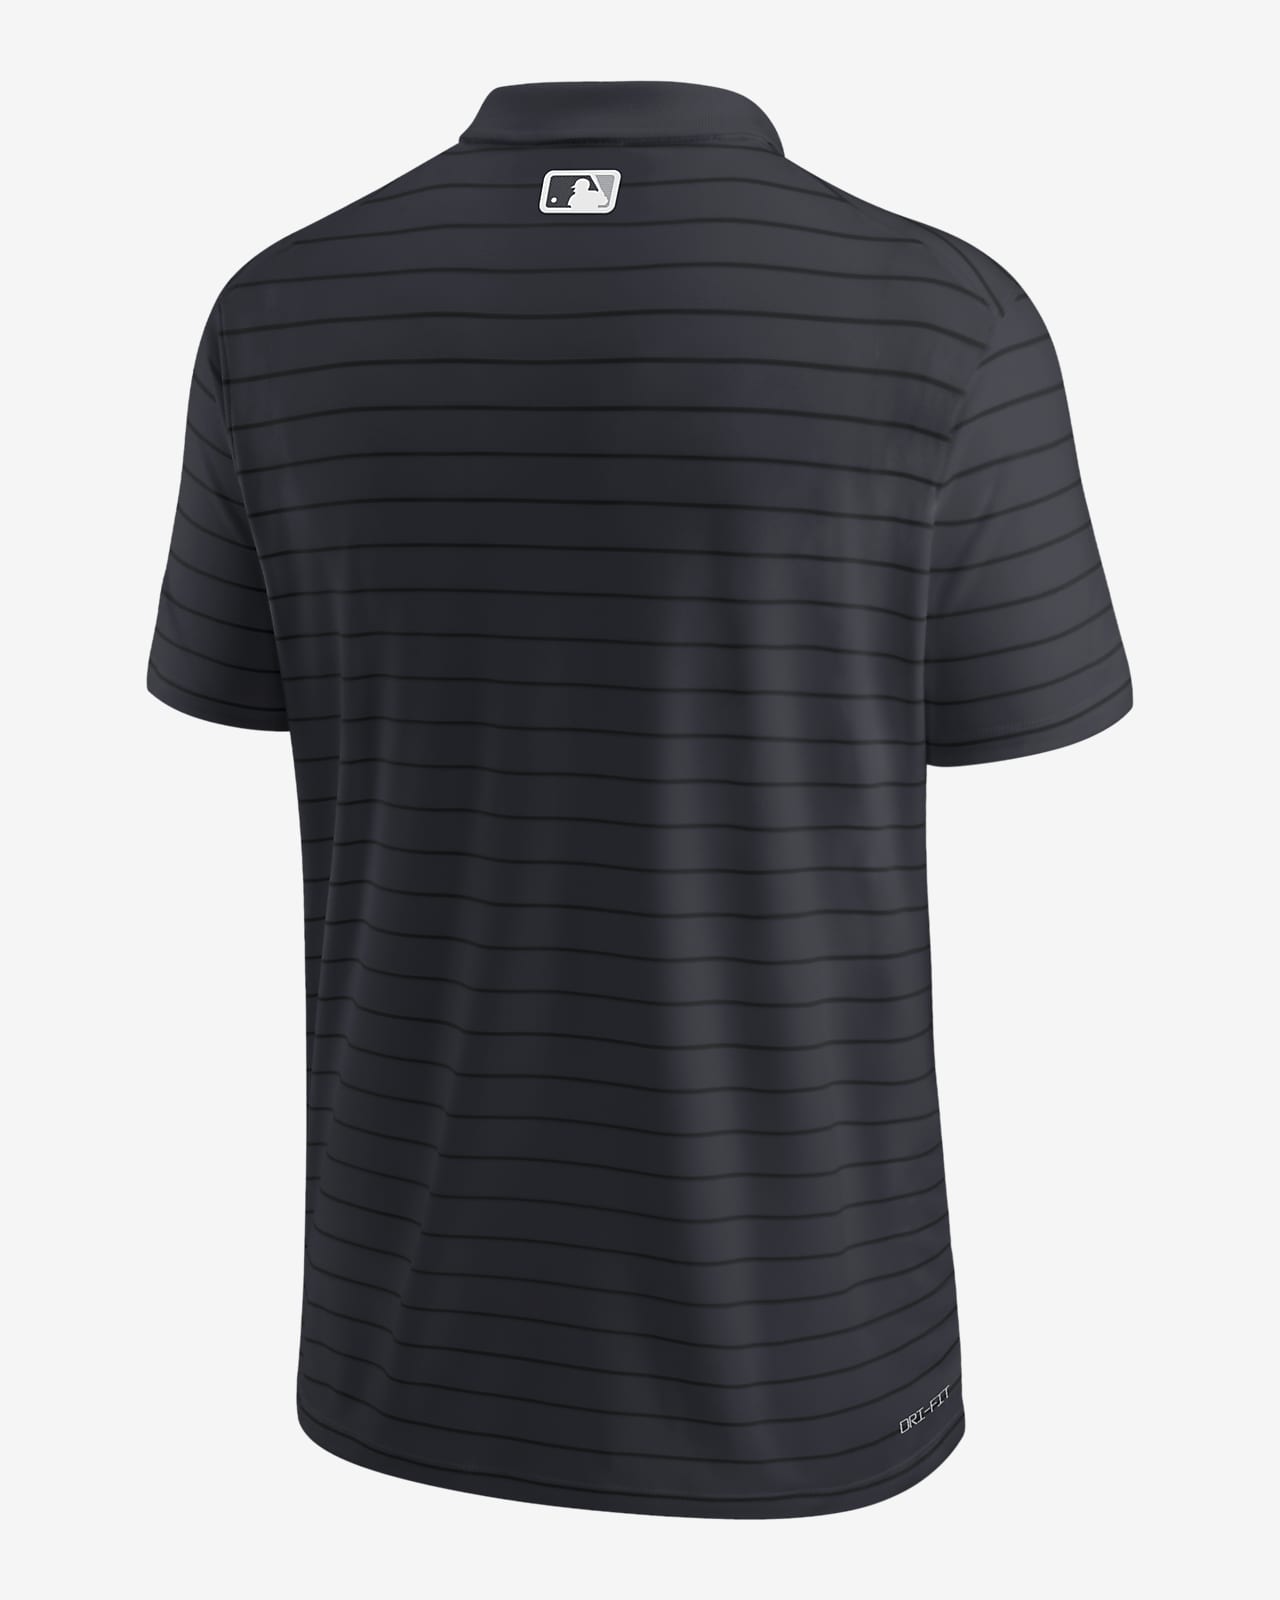 Nike Dri-FIT Striped (MLB New York Yankees) Men's Polo.